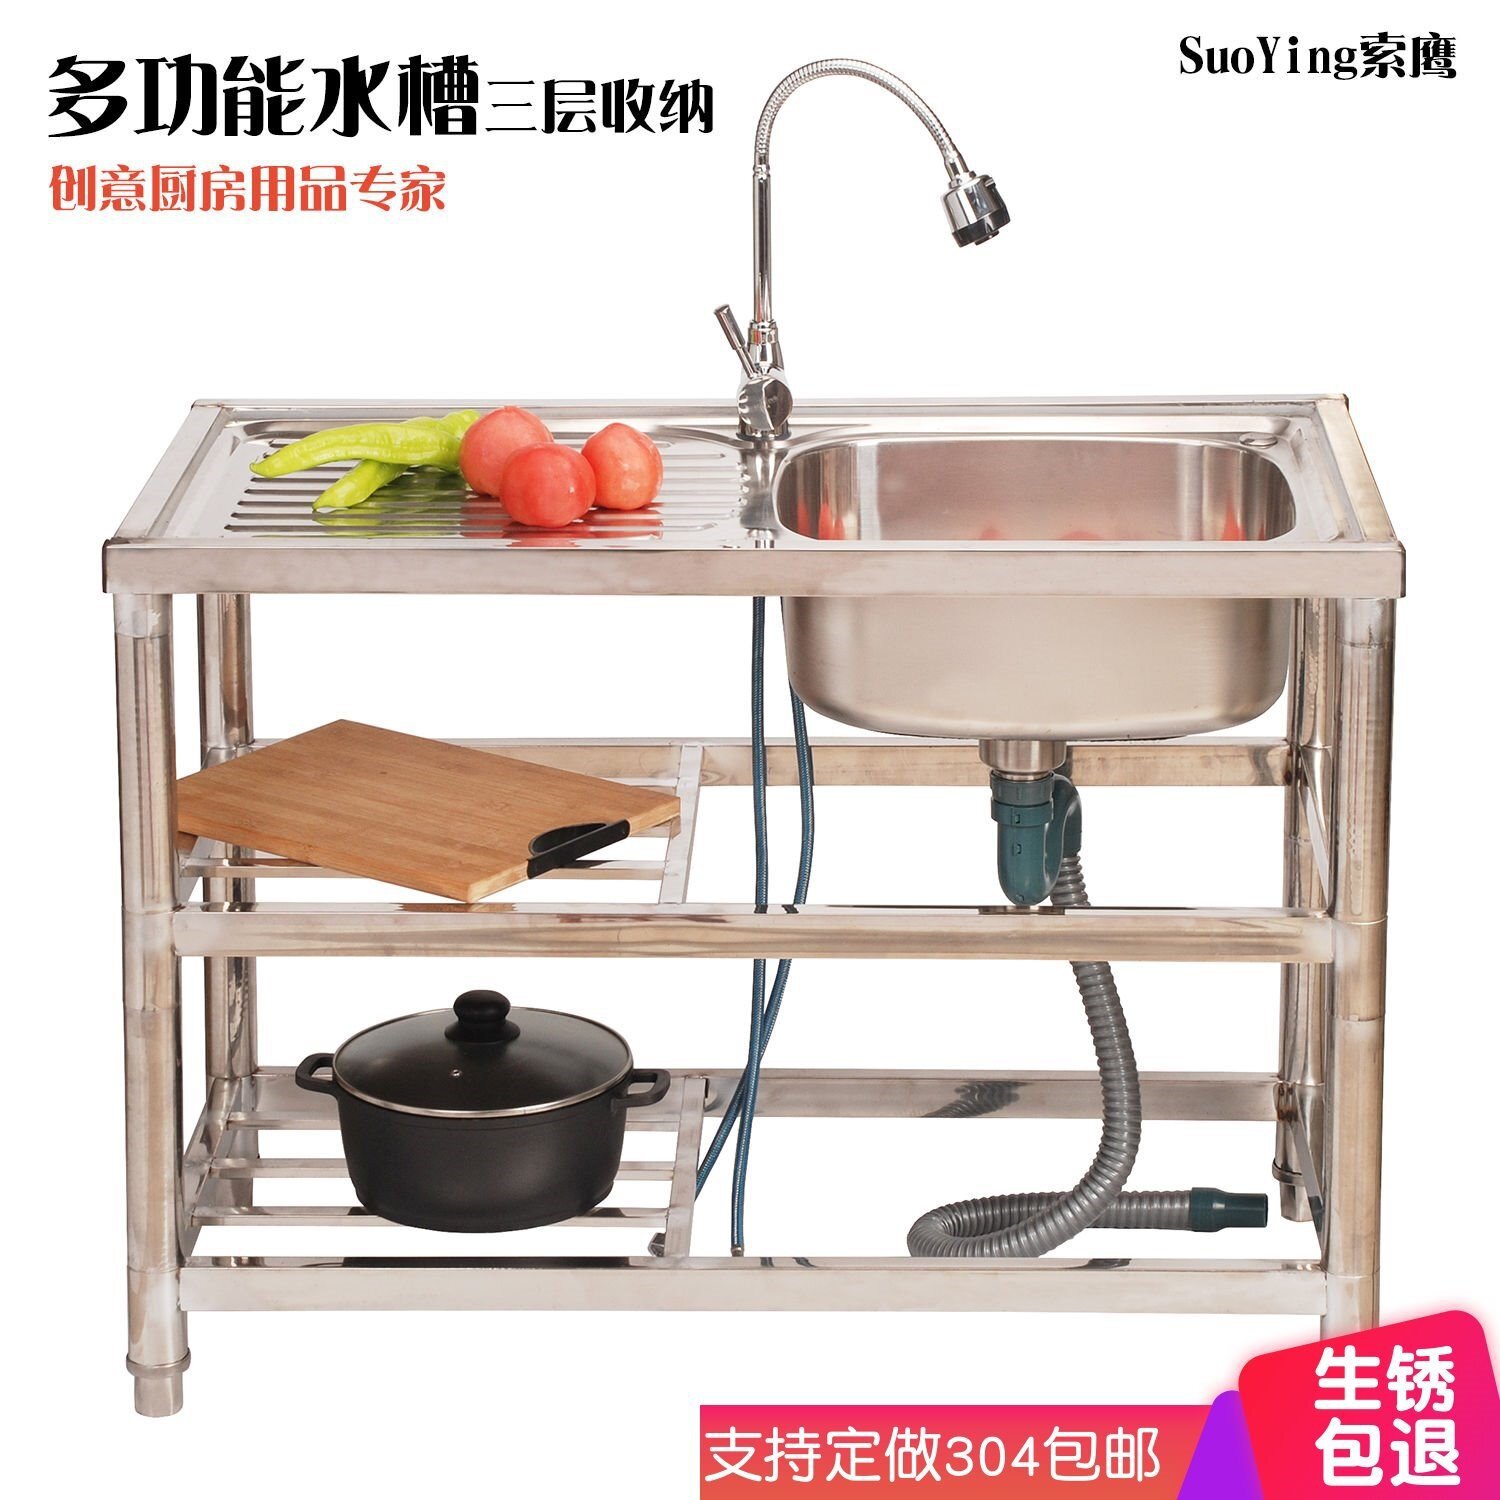 Daily household nstainless steel dishwashing kitchen washin